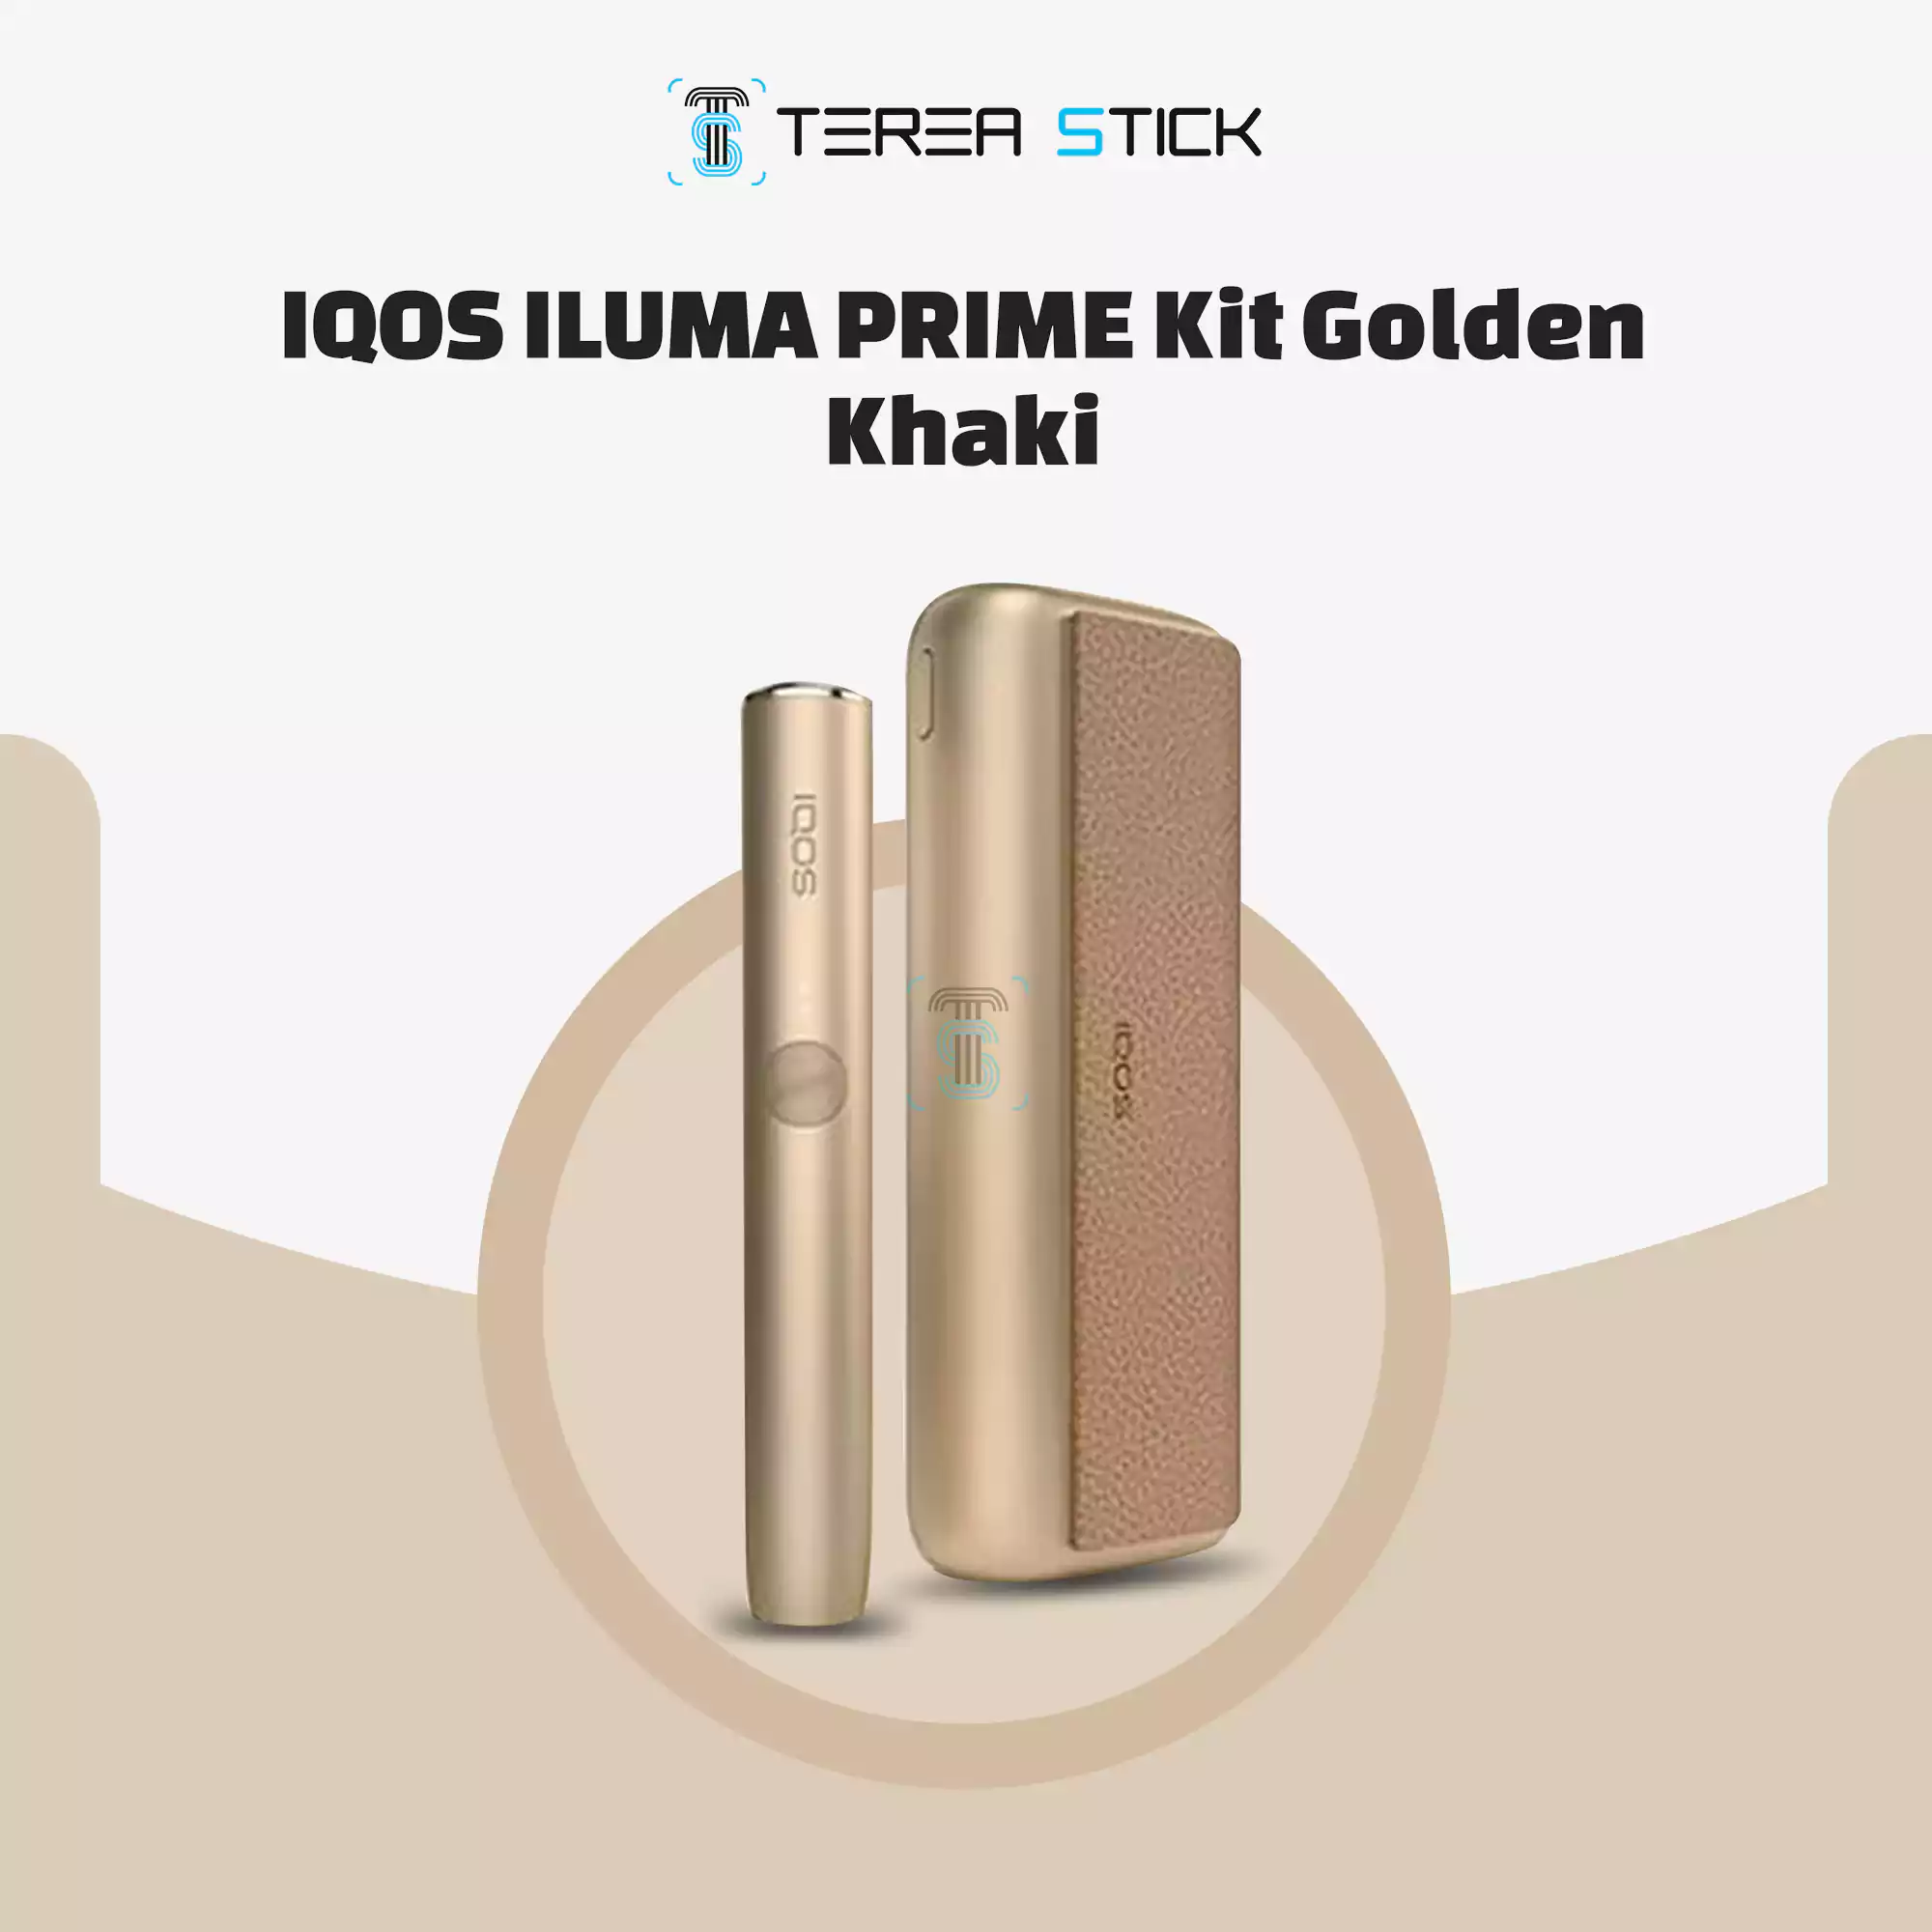 IQOS ILUMA PRIME Kit Golden Khaki UAE